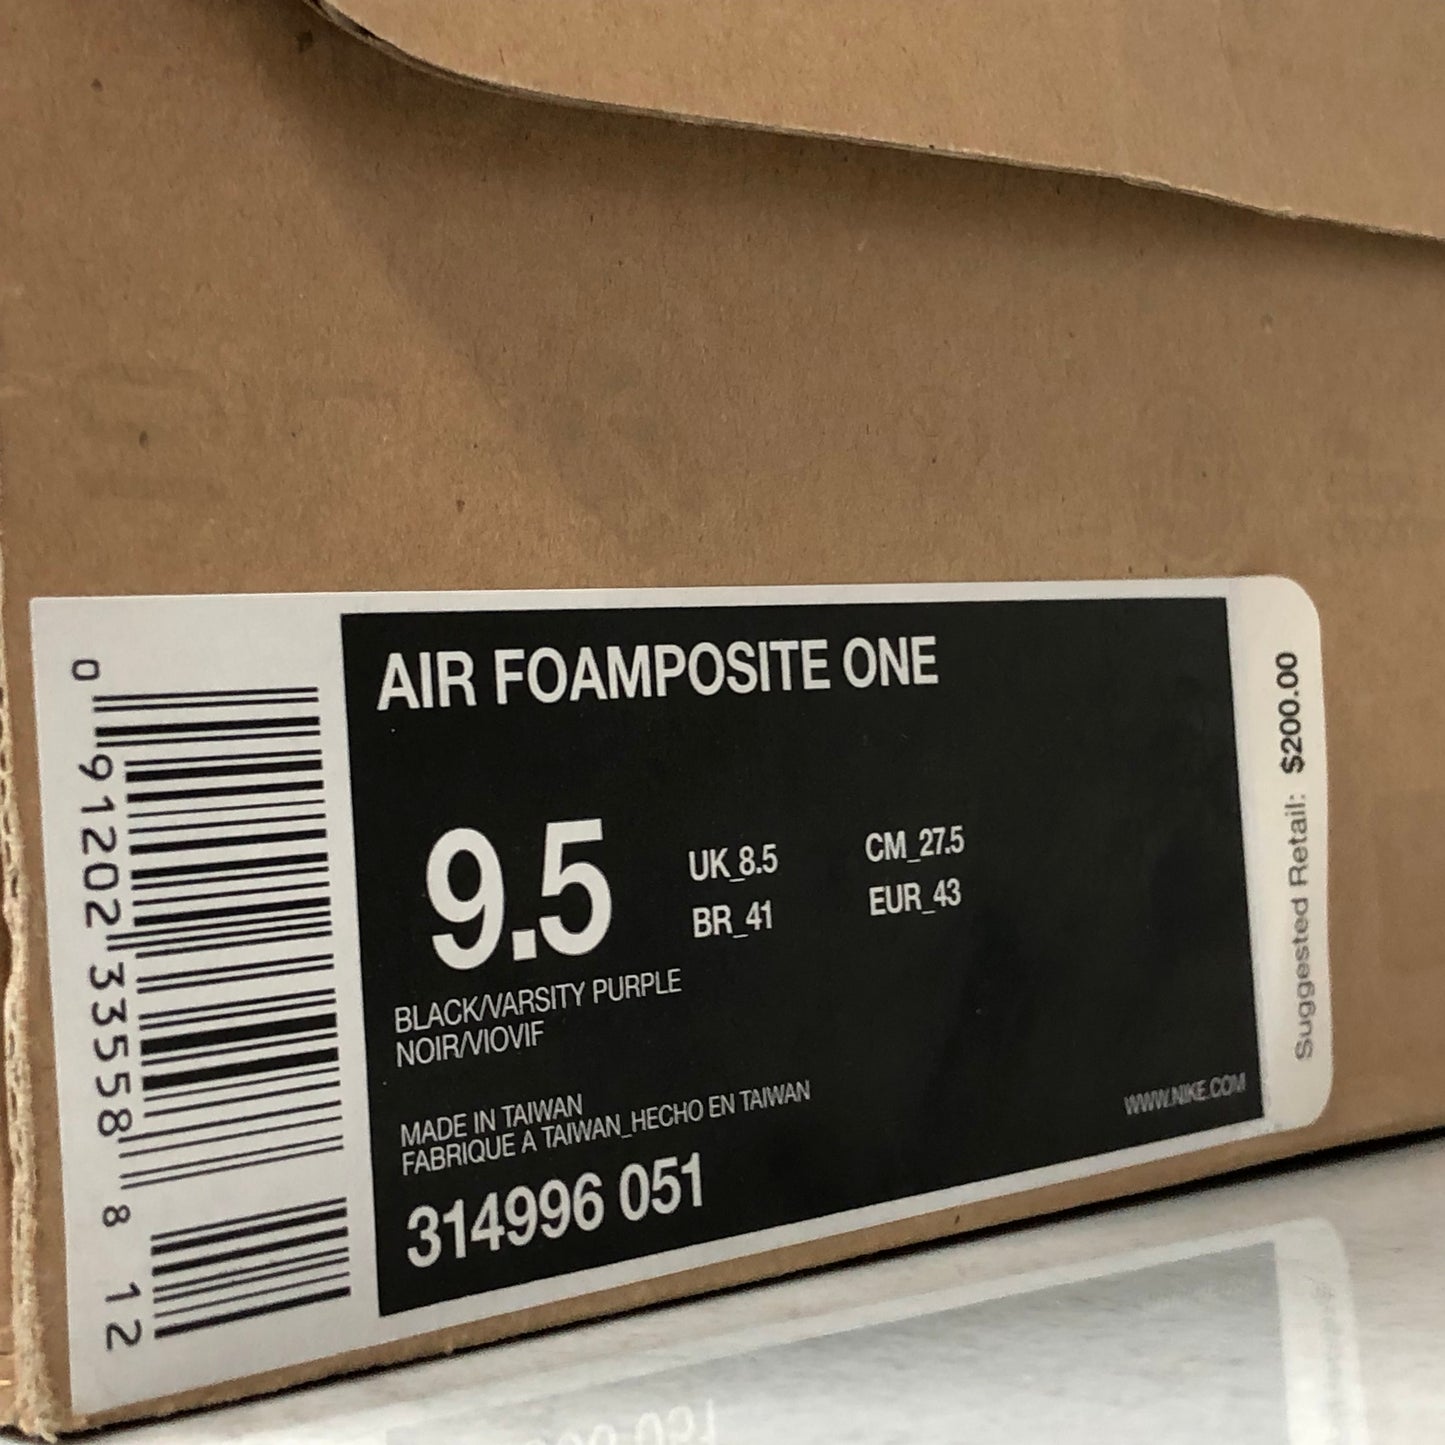 Nike Air Foamposite One Eggplant Size 9.5 Black 314996 051